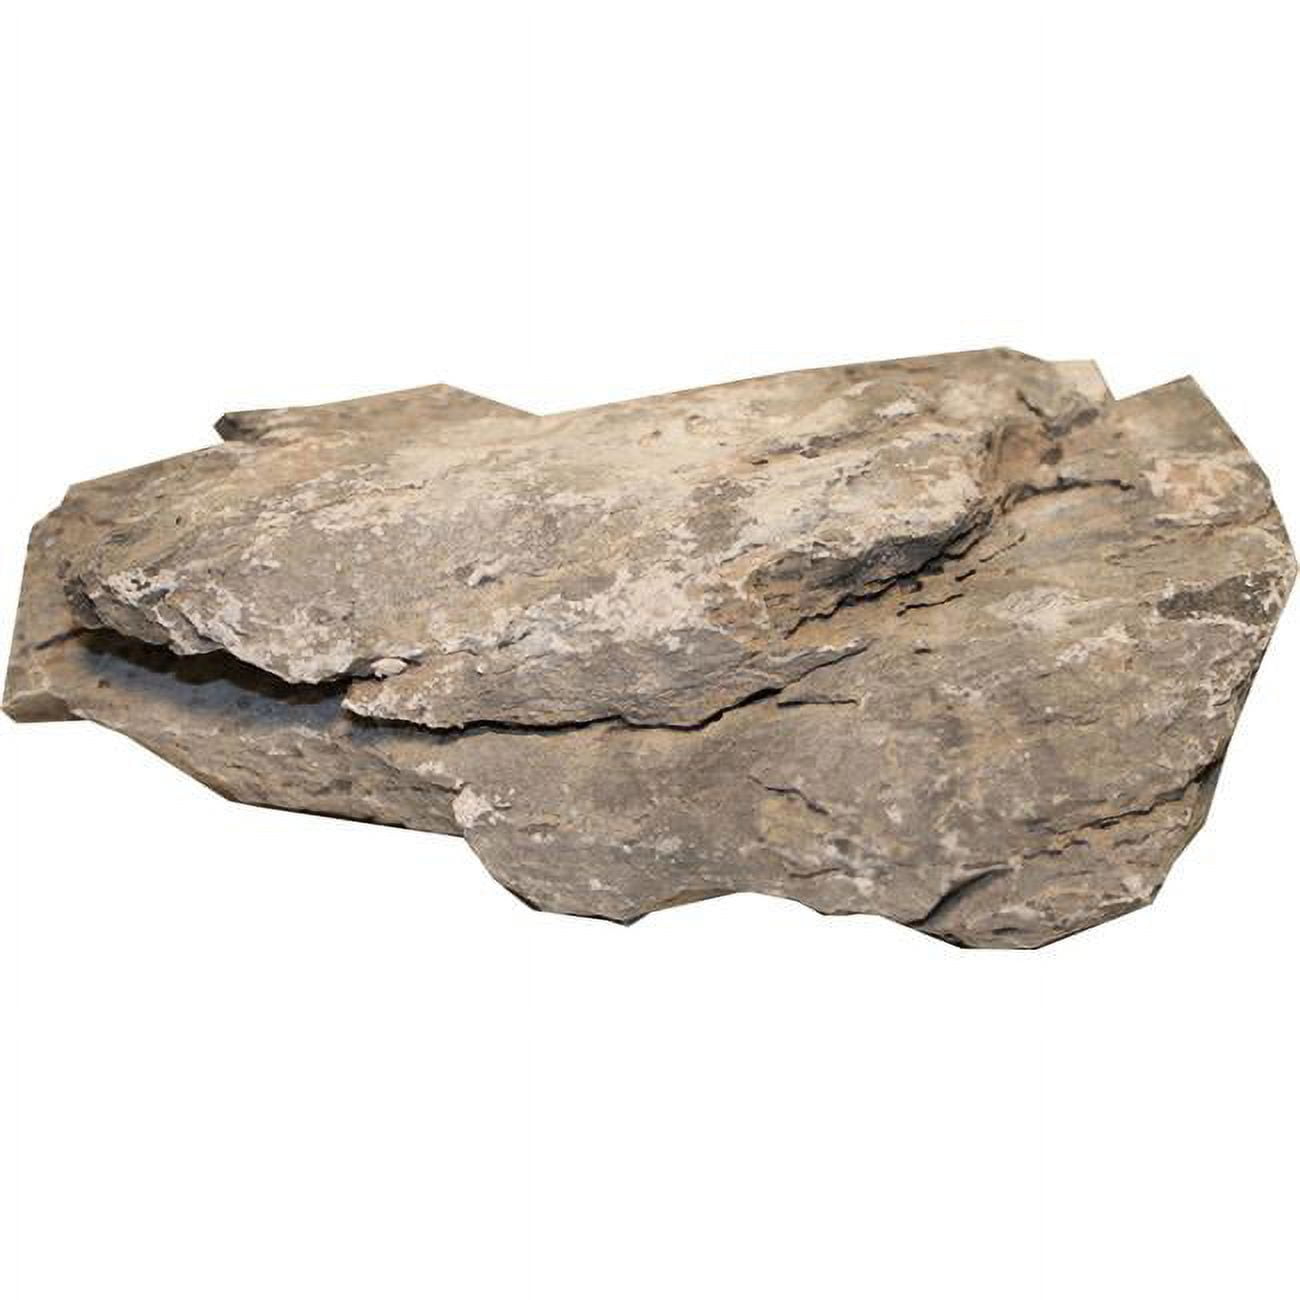 Picture of Carisea 008479003287 Exotica Mountain Stone Aquascaping Stone